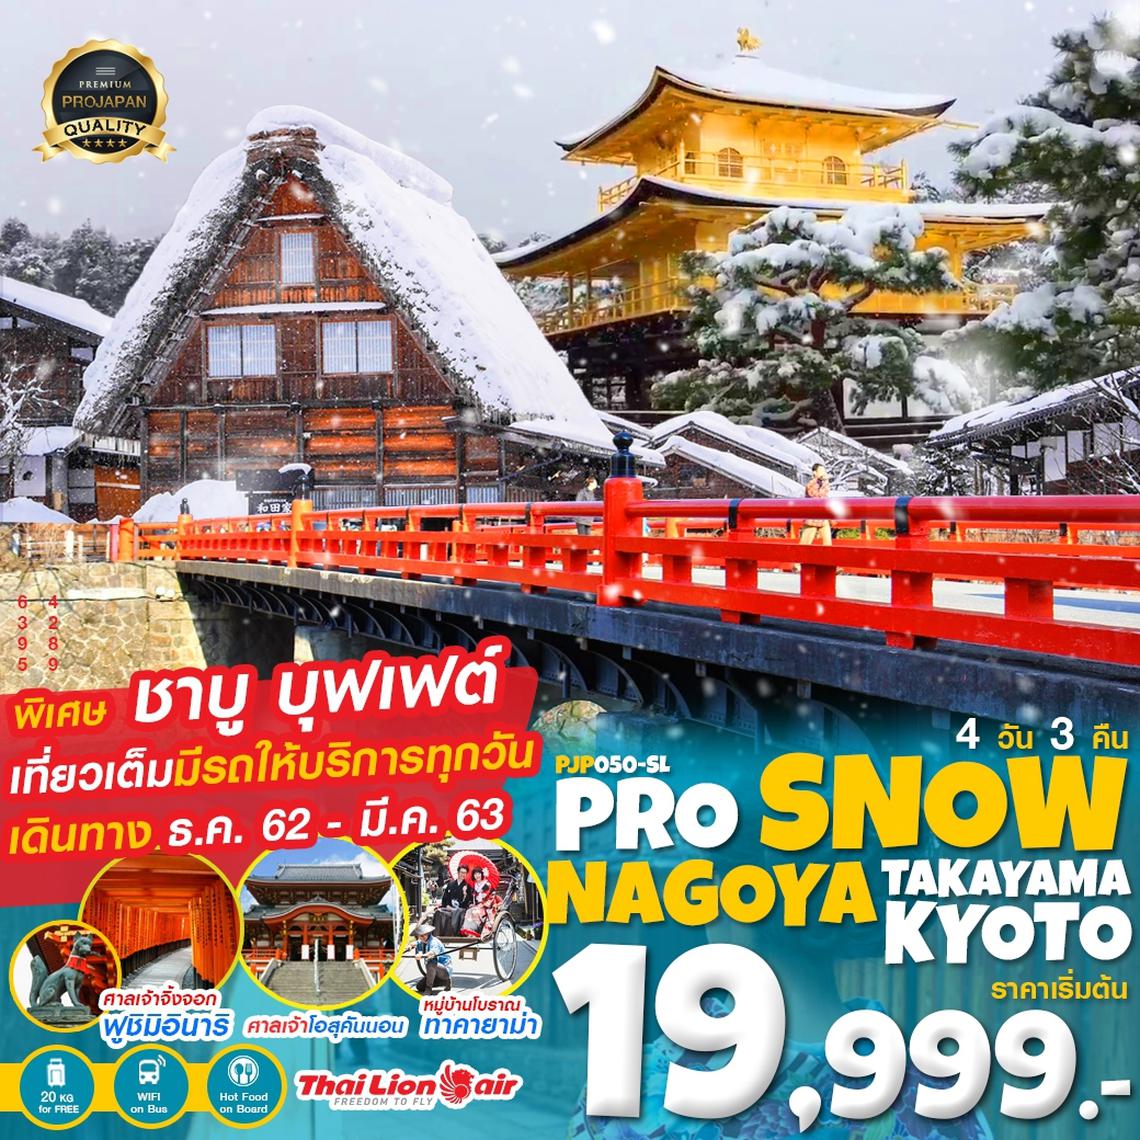 PJP050-SL PRO SNOW NAGOYA TAKAYAMA KYOTO 4D3N